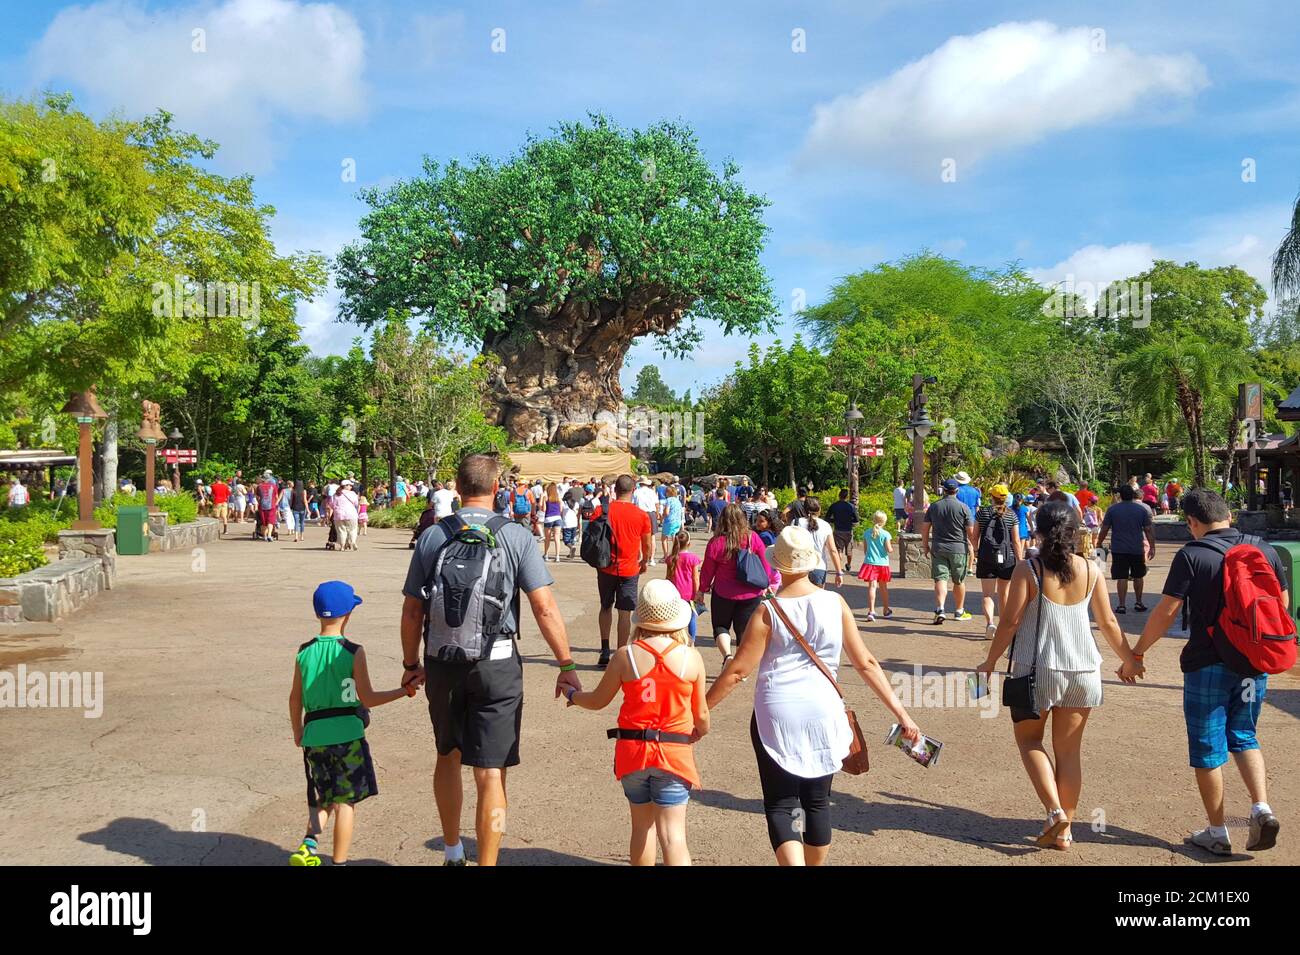 Les clients de Disney World se dirigent vers The Tree of Life in Animal Kingdom, Discovery Island Area, Orlando, Floride, États-Unis Banque D'Images